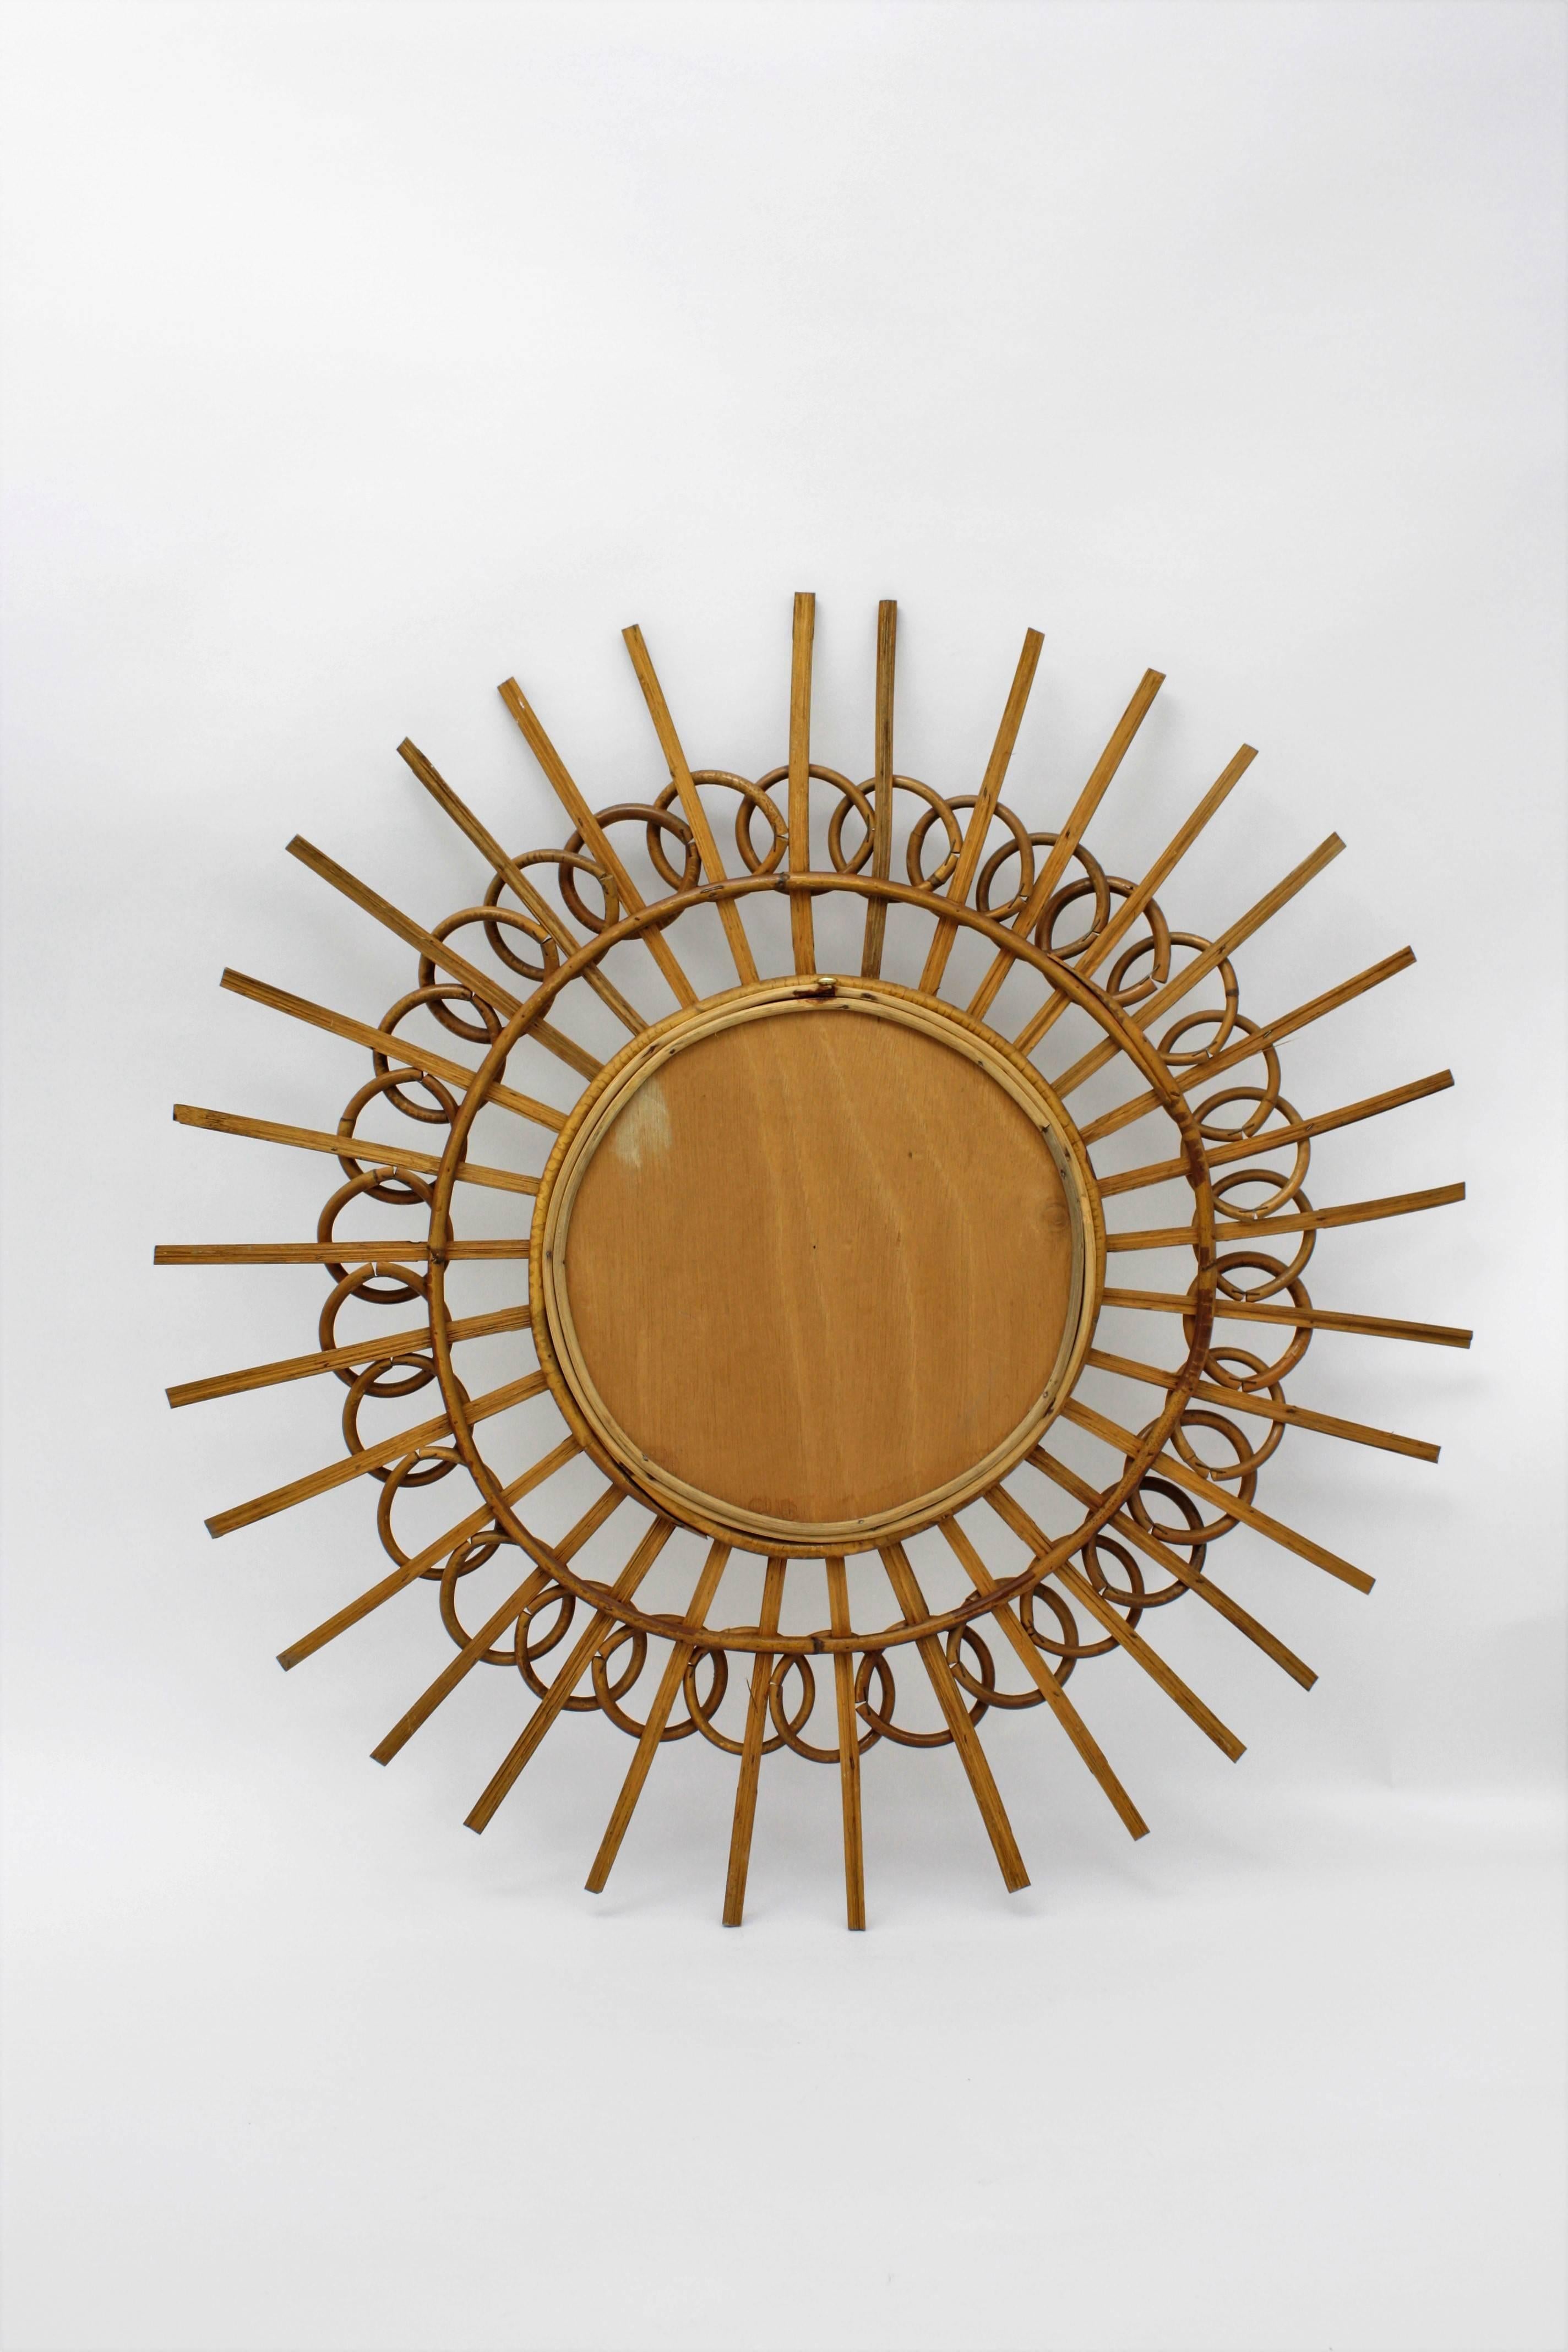 1960s French Riviera Mid-Century Modern Rattan Sunburst Mirror Framed by Circles 1